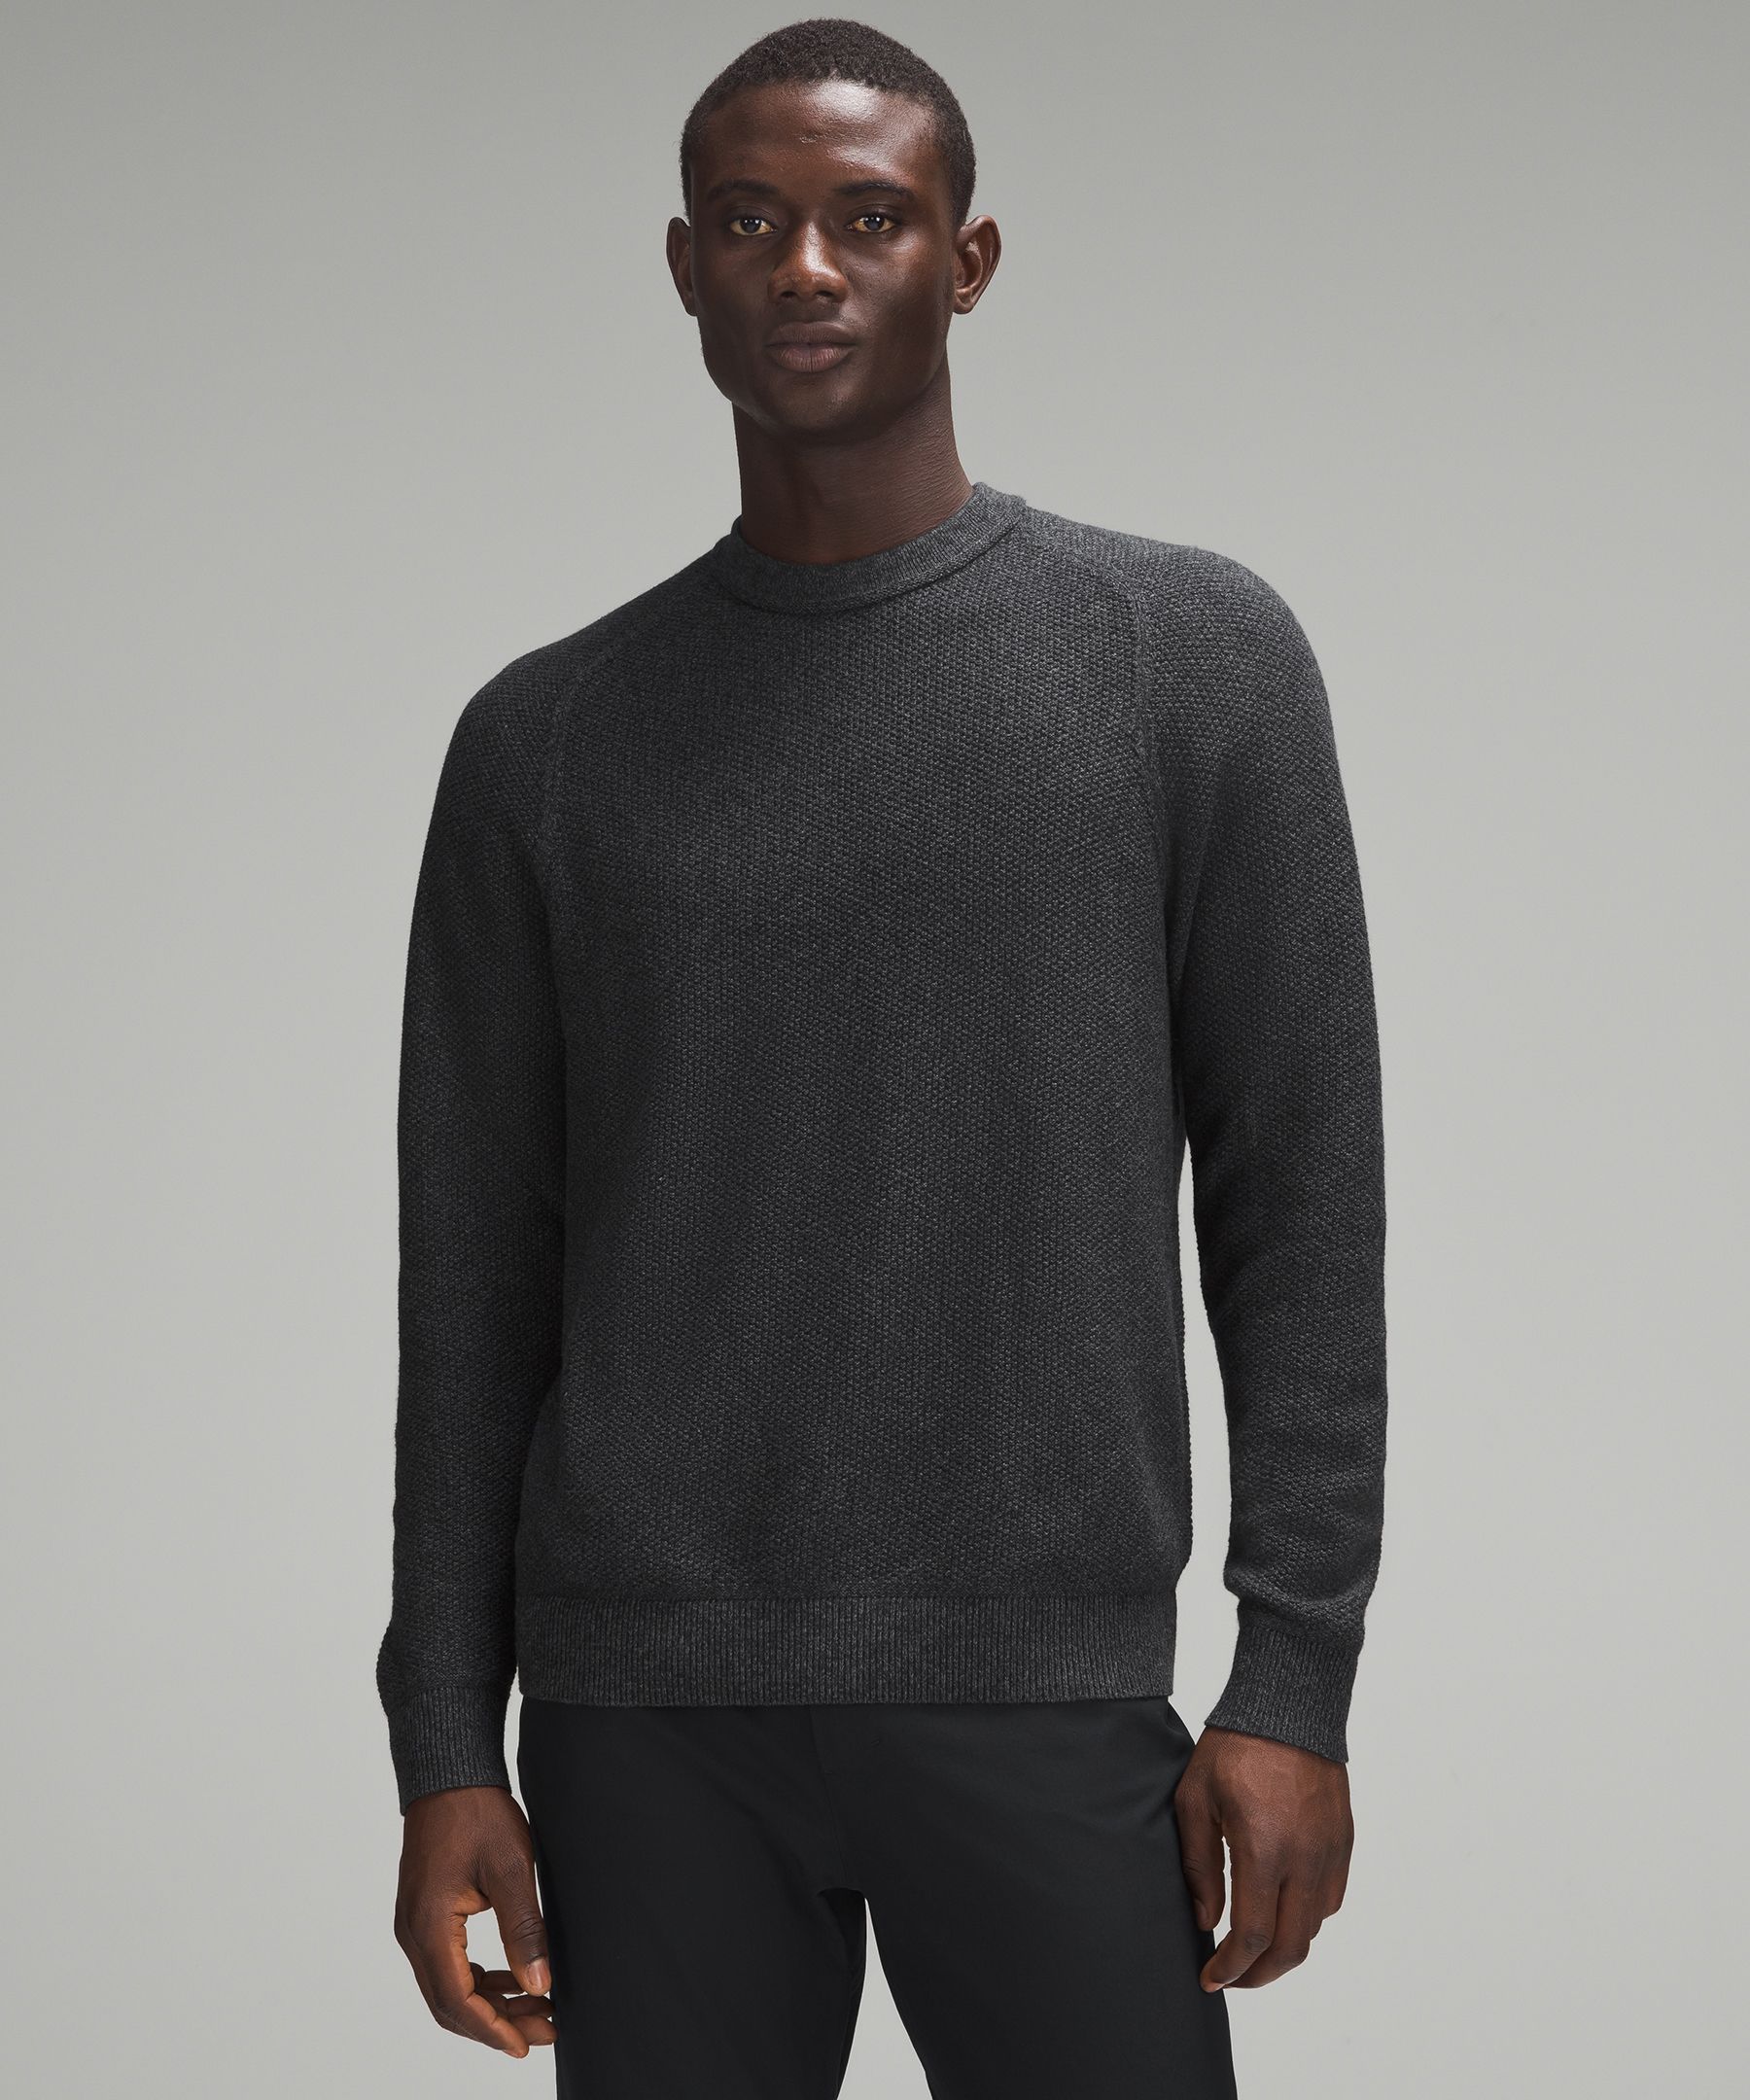 Lululemon sweatshirt crewneck black Z50416 Size 12 @X